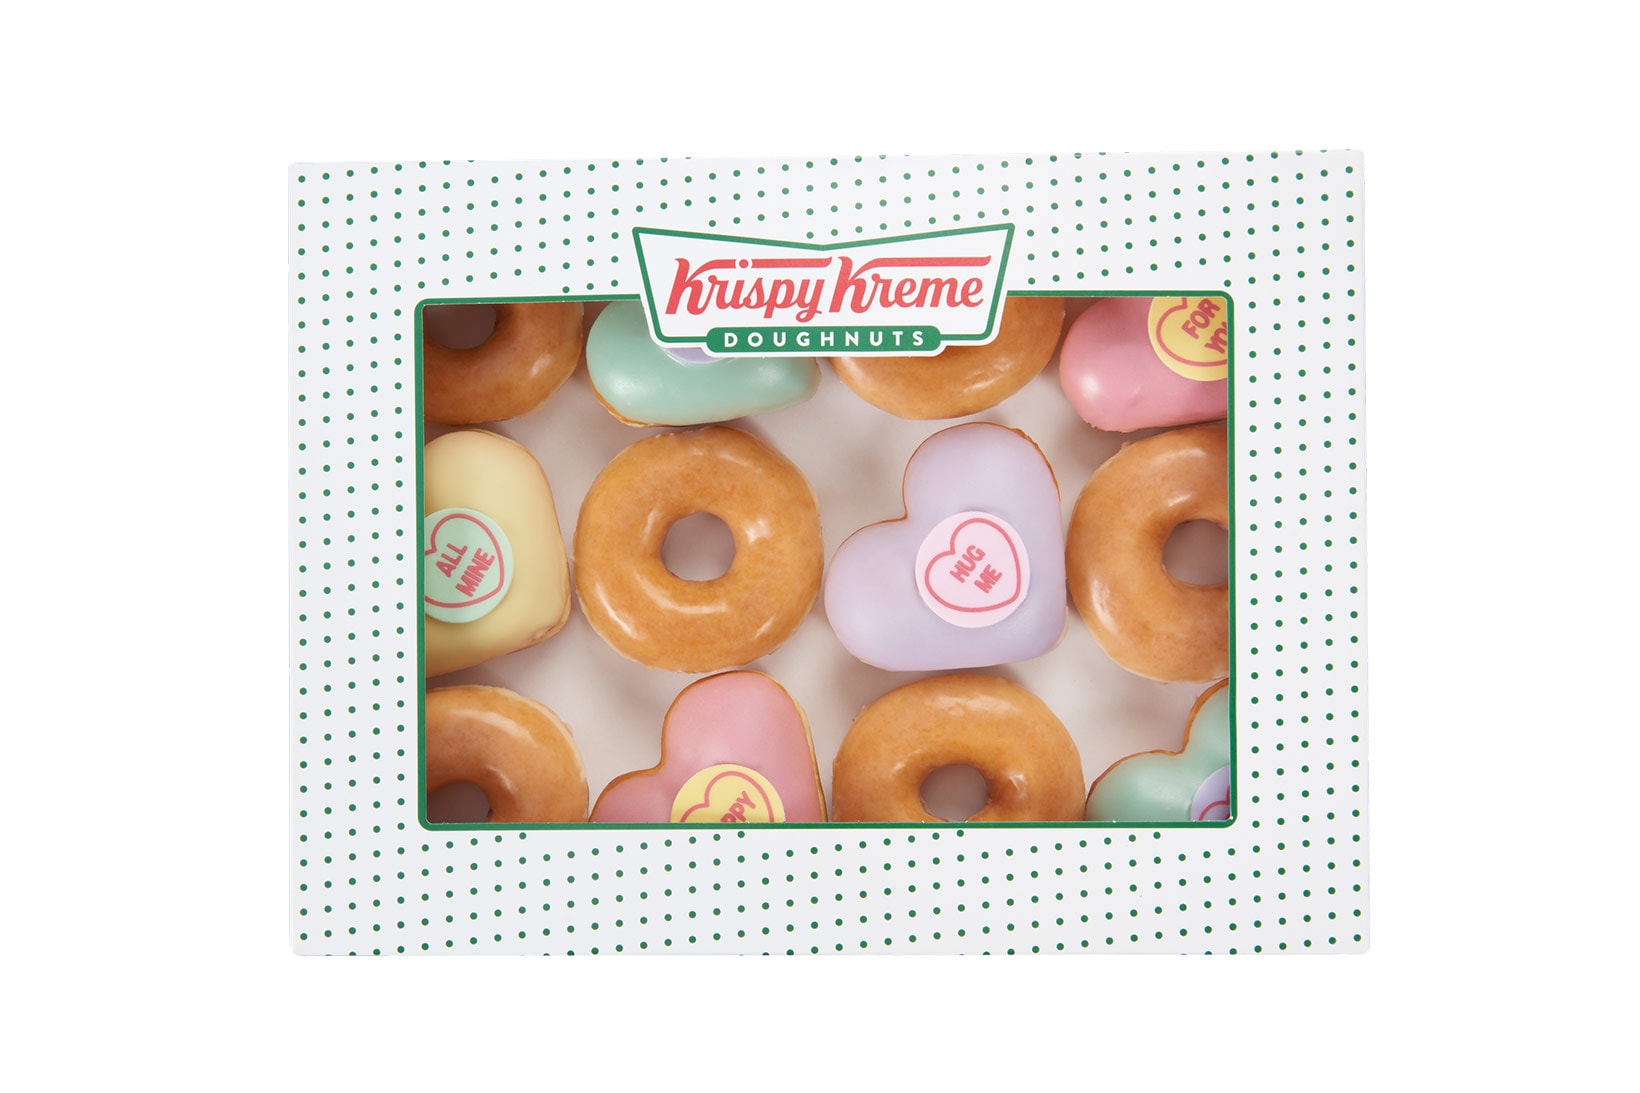 krispy kreme swizzels heart shaped donuts valentines day collaboration dessert box pink green purple yellow